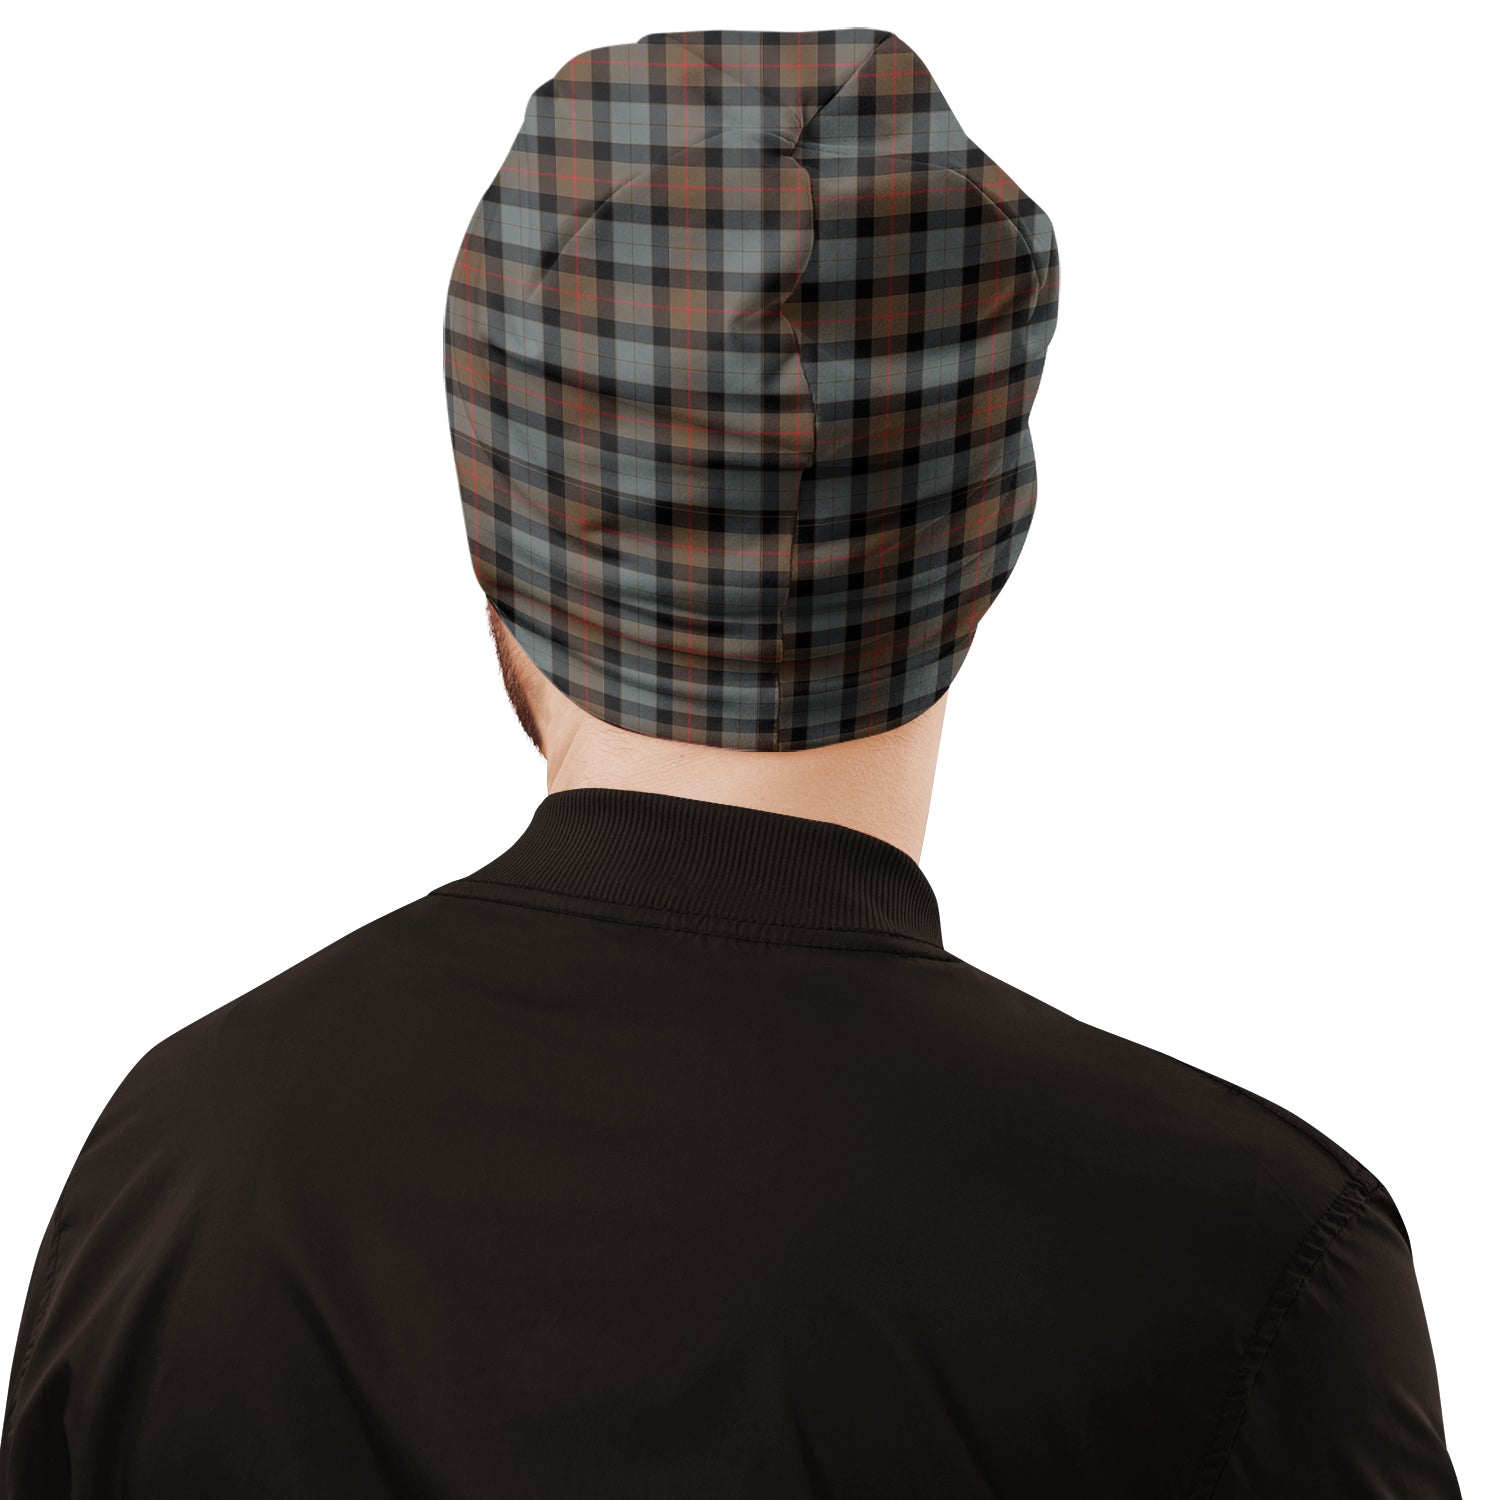 gunn-weathered-tartan-beanies-hat-with-family-crest